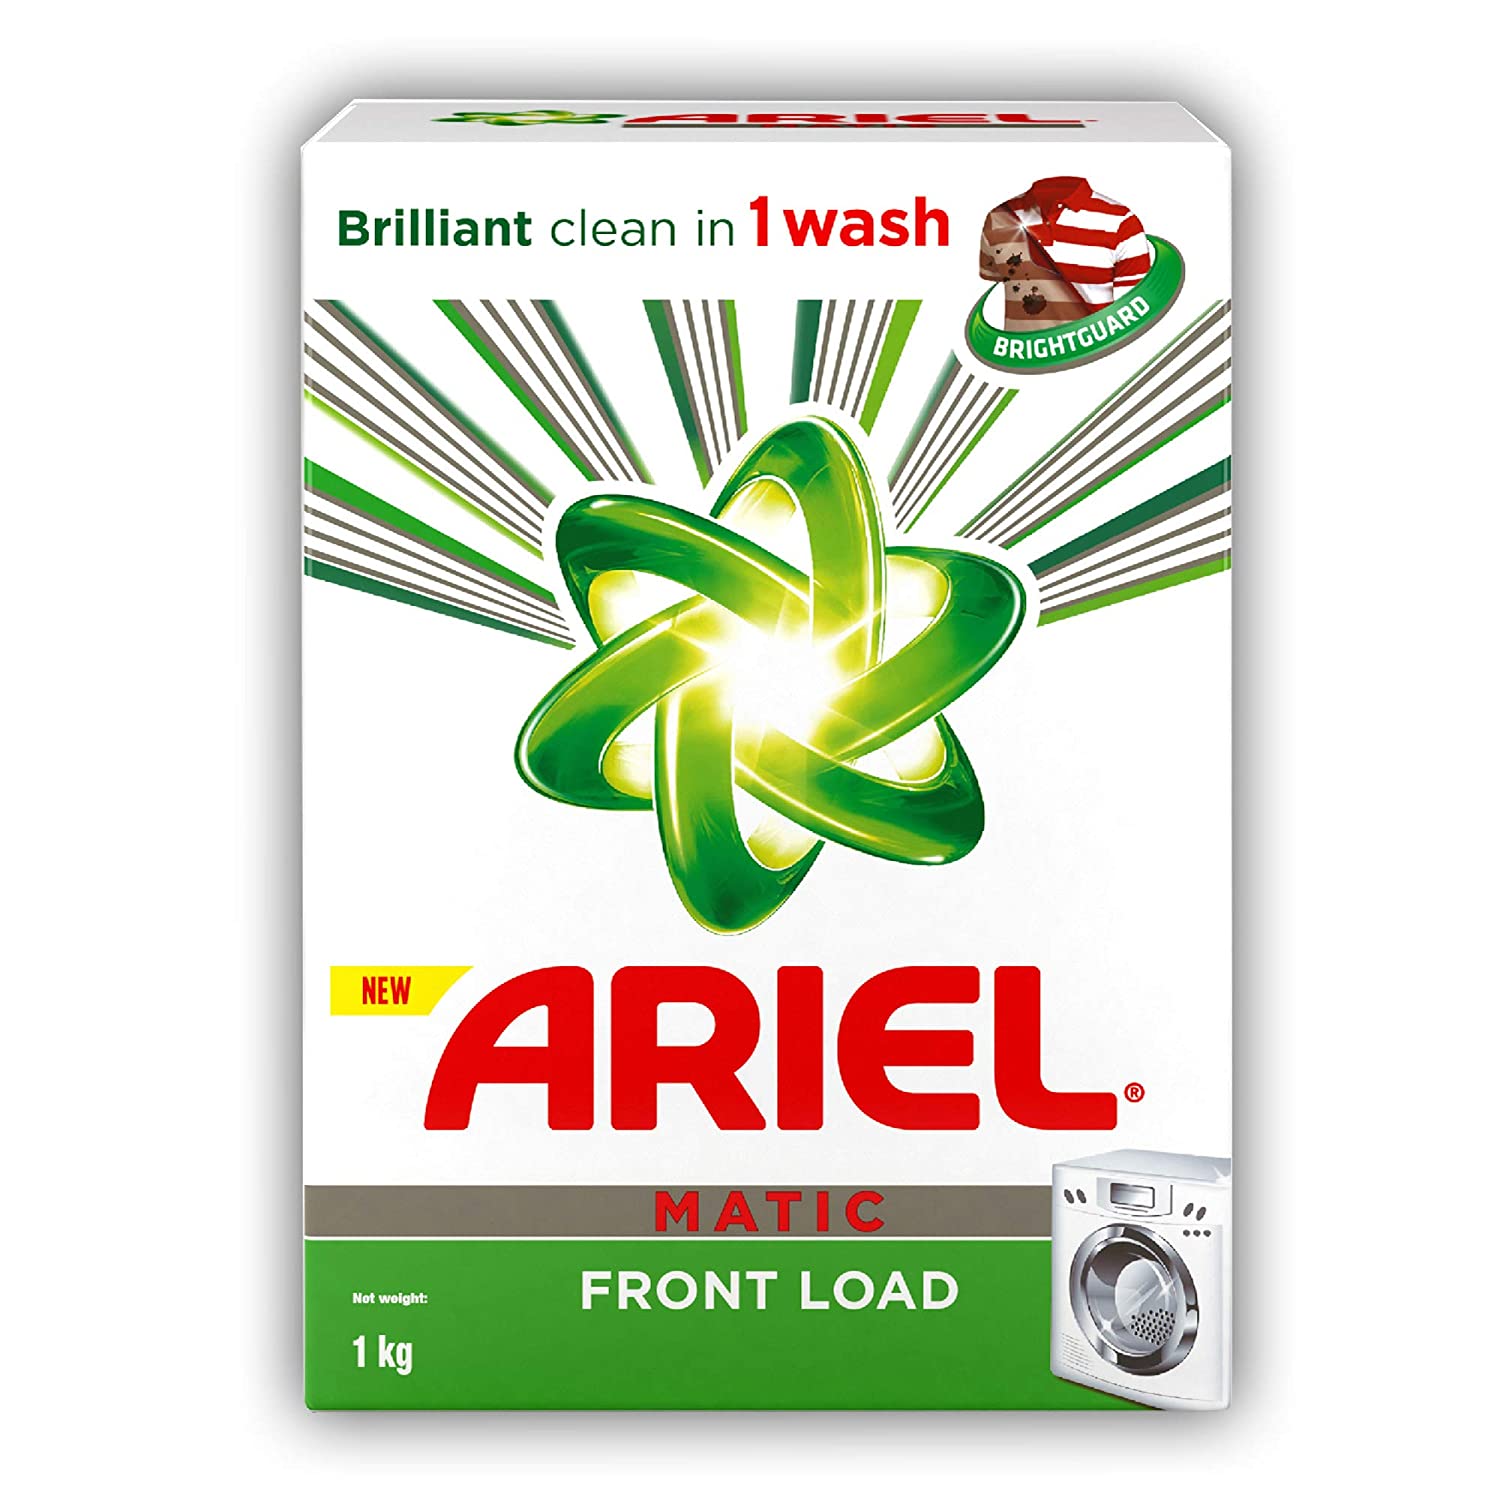 Ariel Matic Front Load Detergent Powder 1KG  